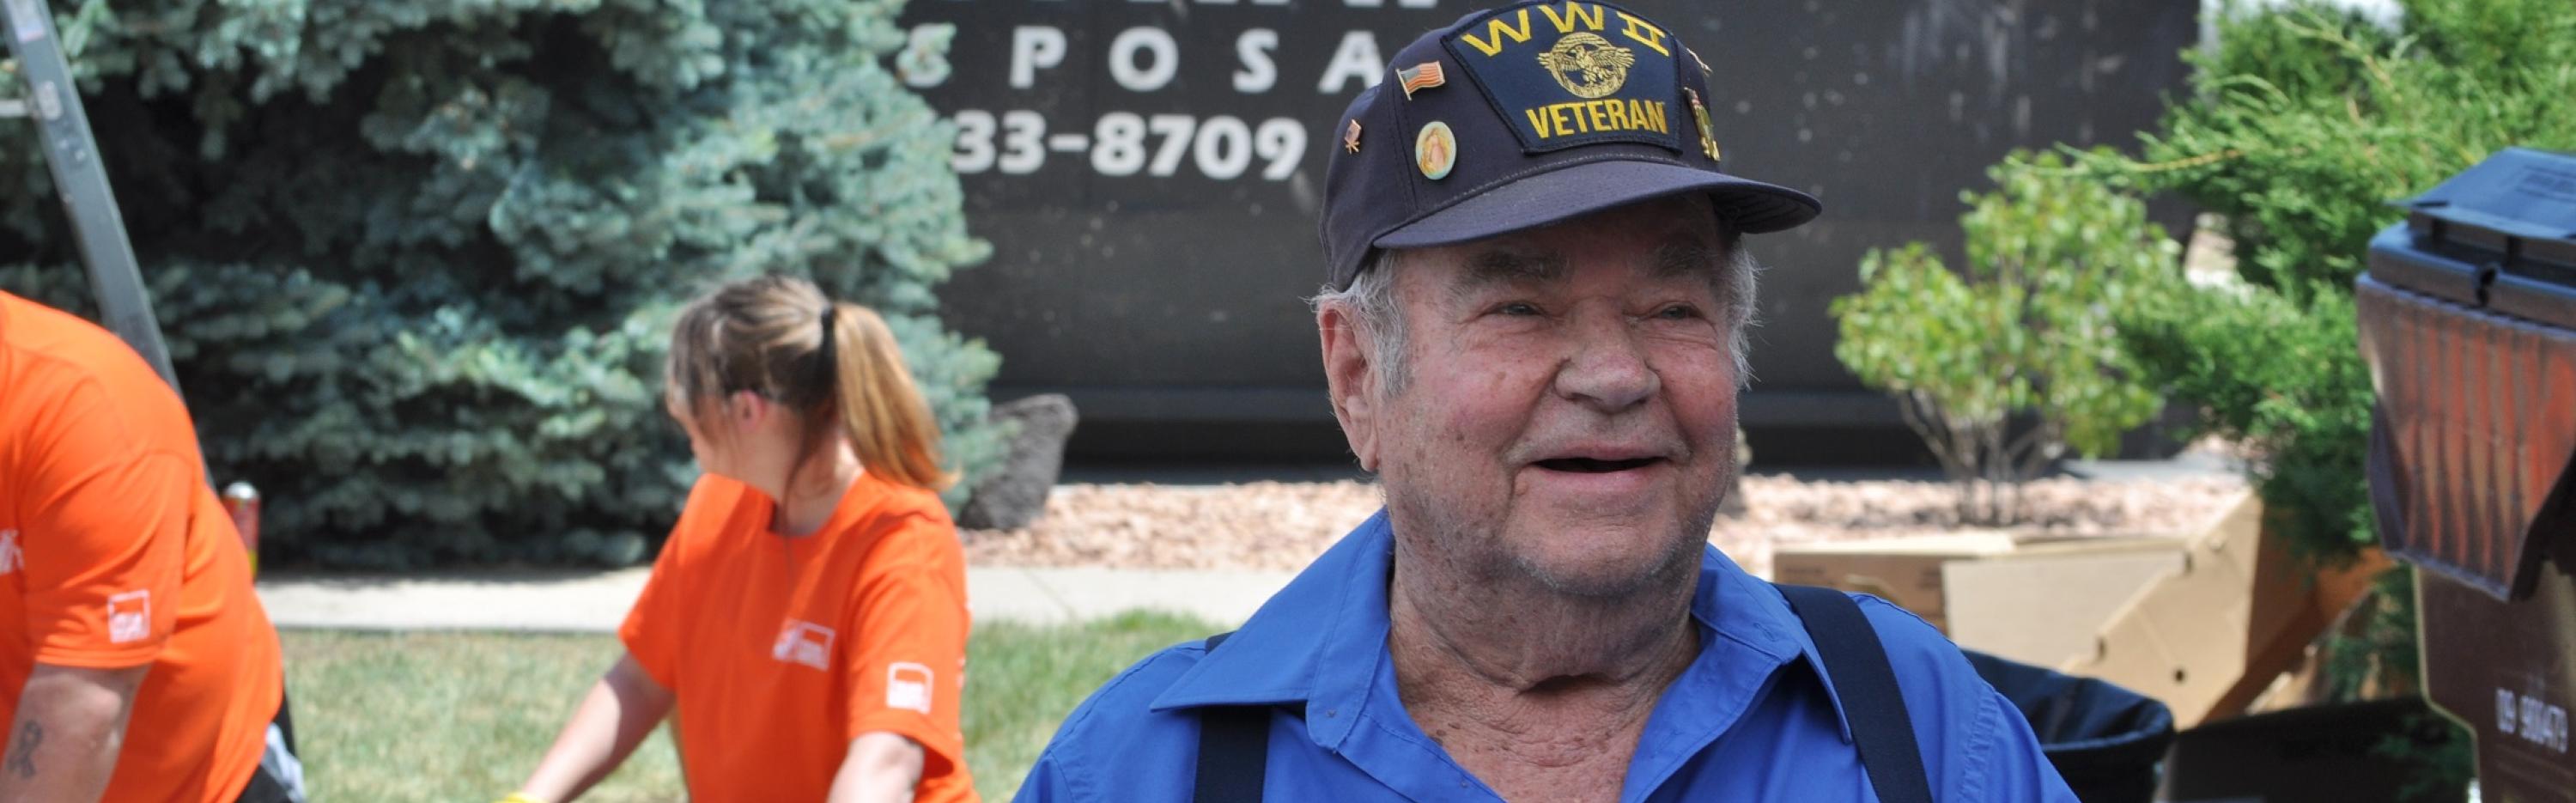 WWII veteran watches as Team Depot volunteers renovate his home